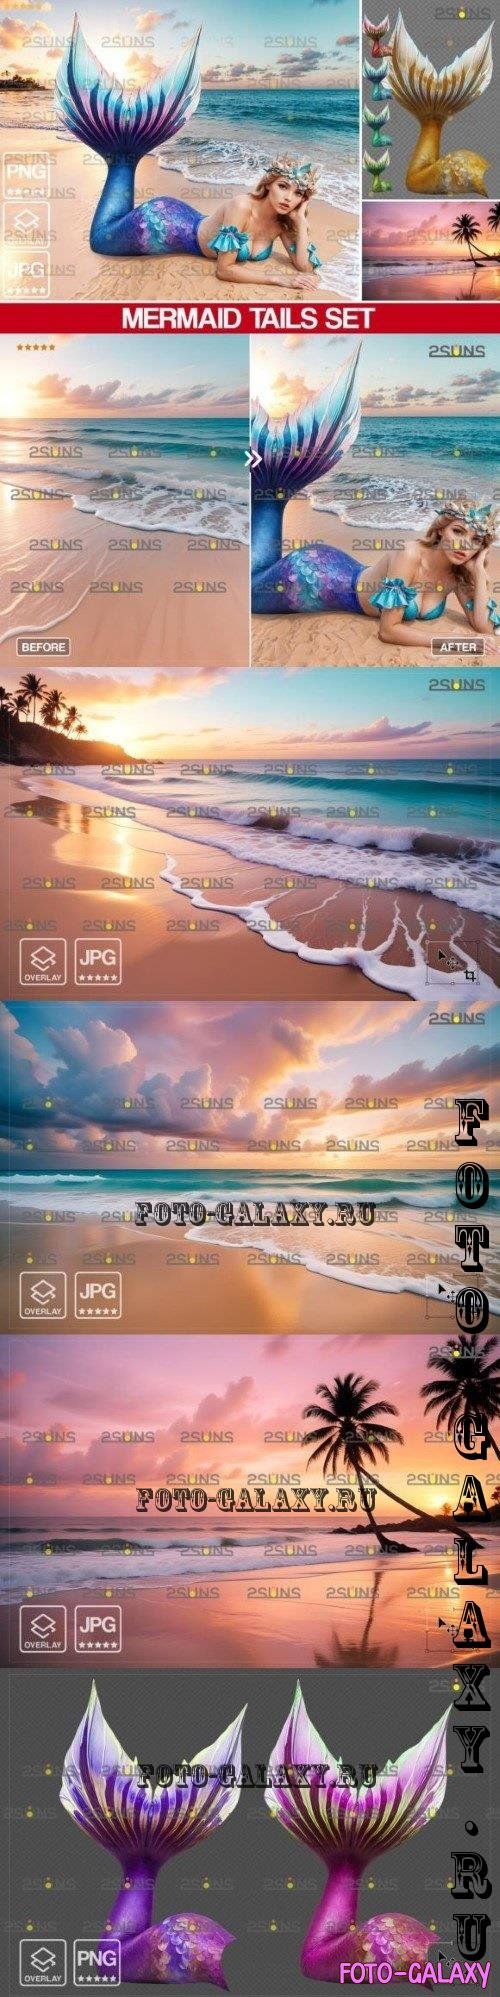 Mermaid photoshop overlays backdrops Vol 03 - 280356423